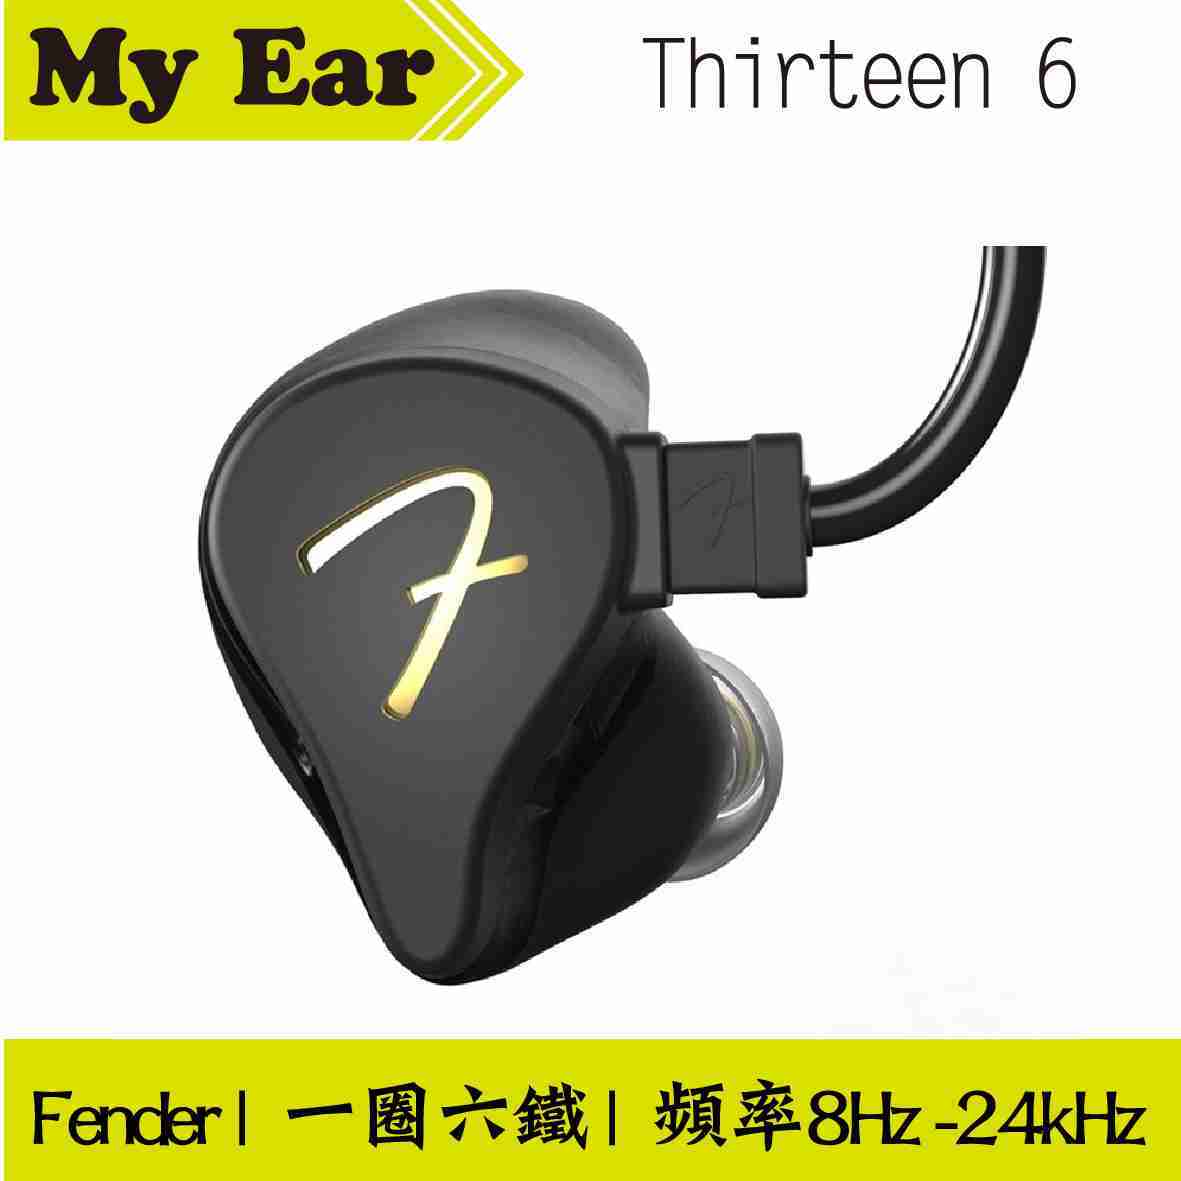 Fender Thirteen 6 耳道式耳機 1圈6鐵 圈鐵混合 Thirteen6 | My Ear耳機專門店